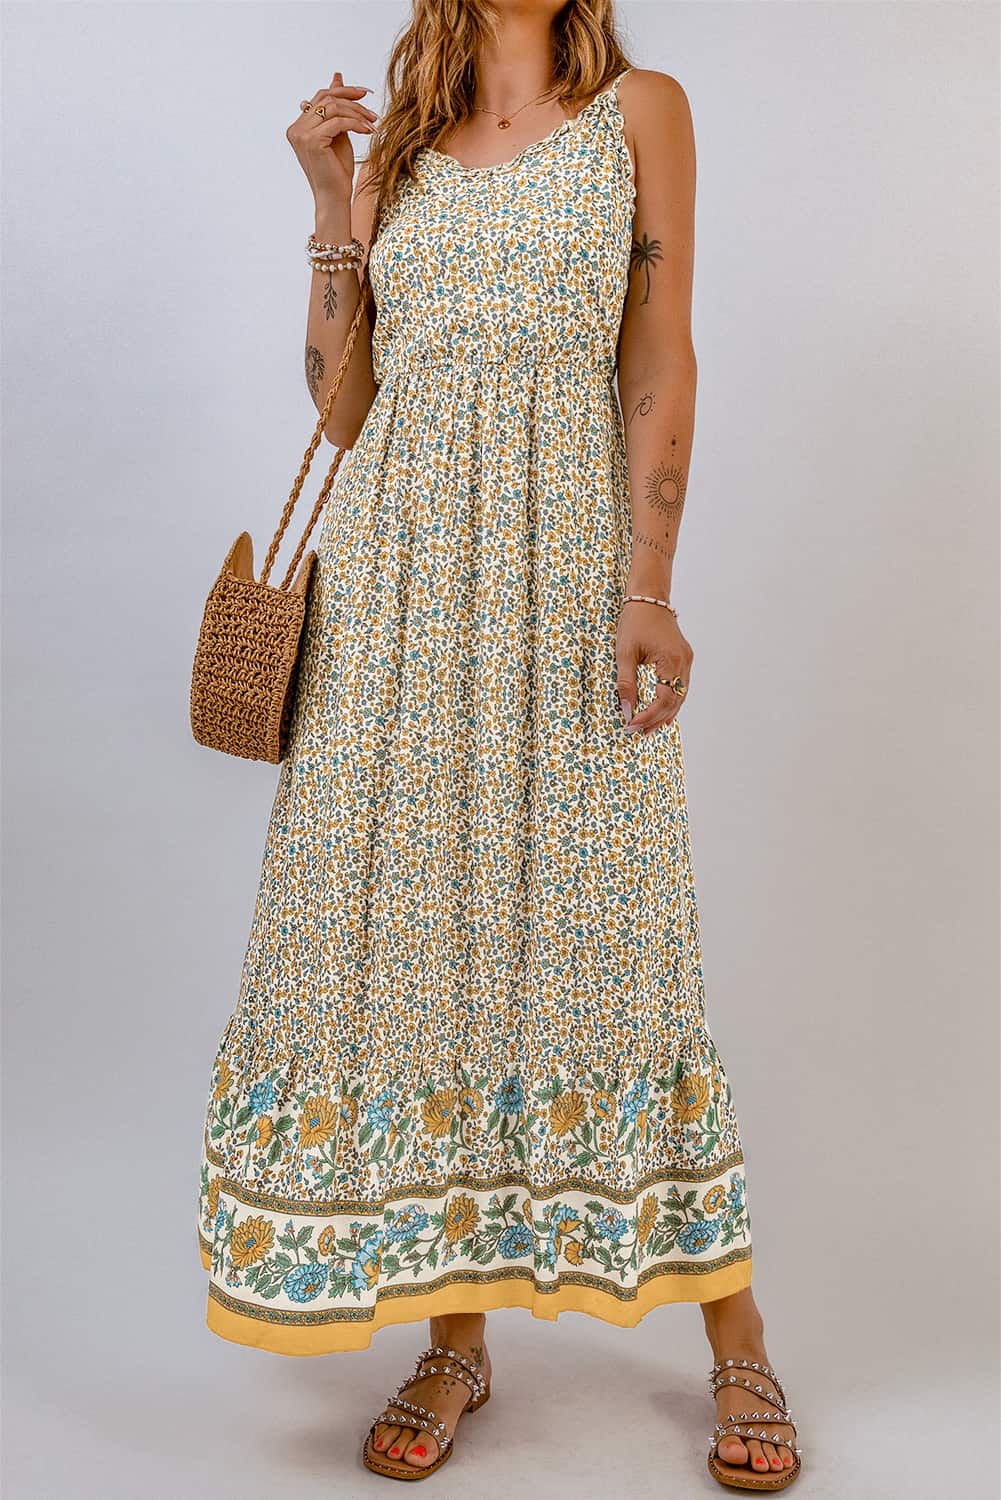 Shewin Wholesale Clothes Distributor Apricot Floral Print Frill Detail Boho Maxi DRESS